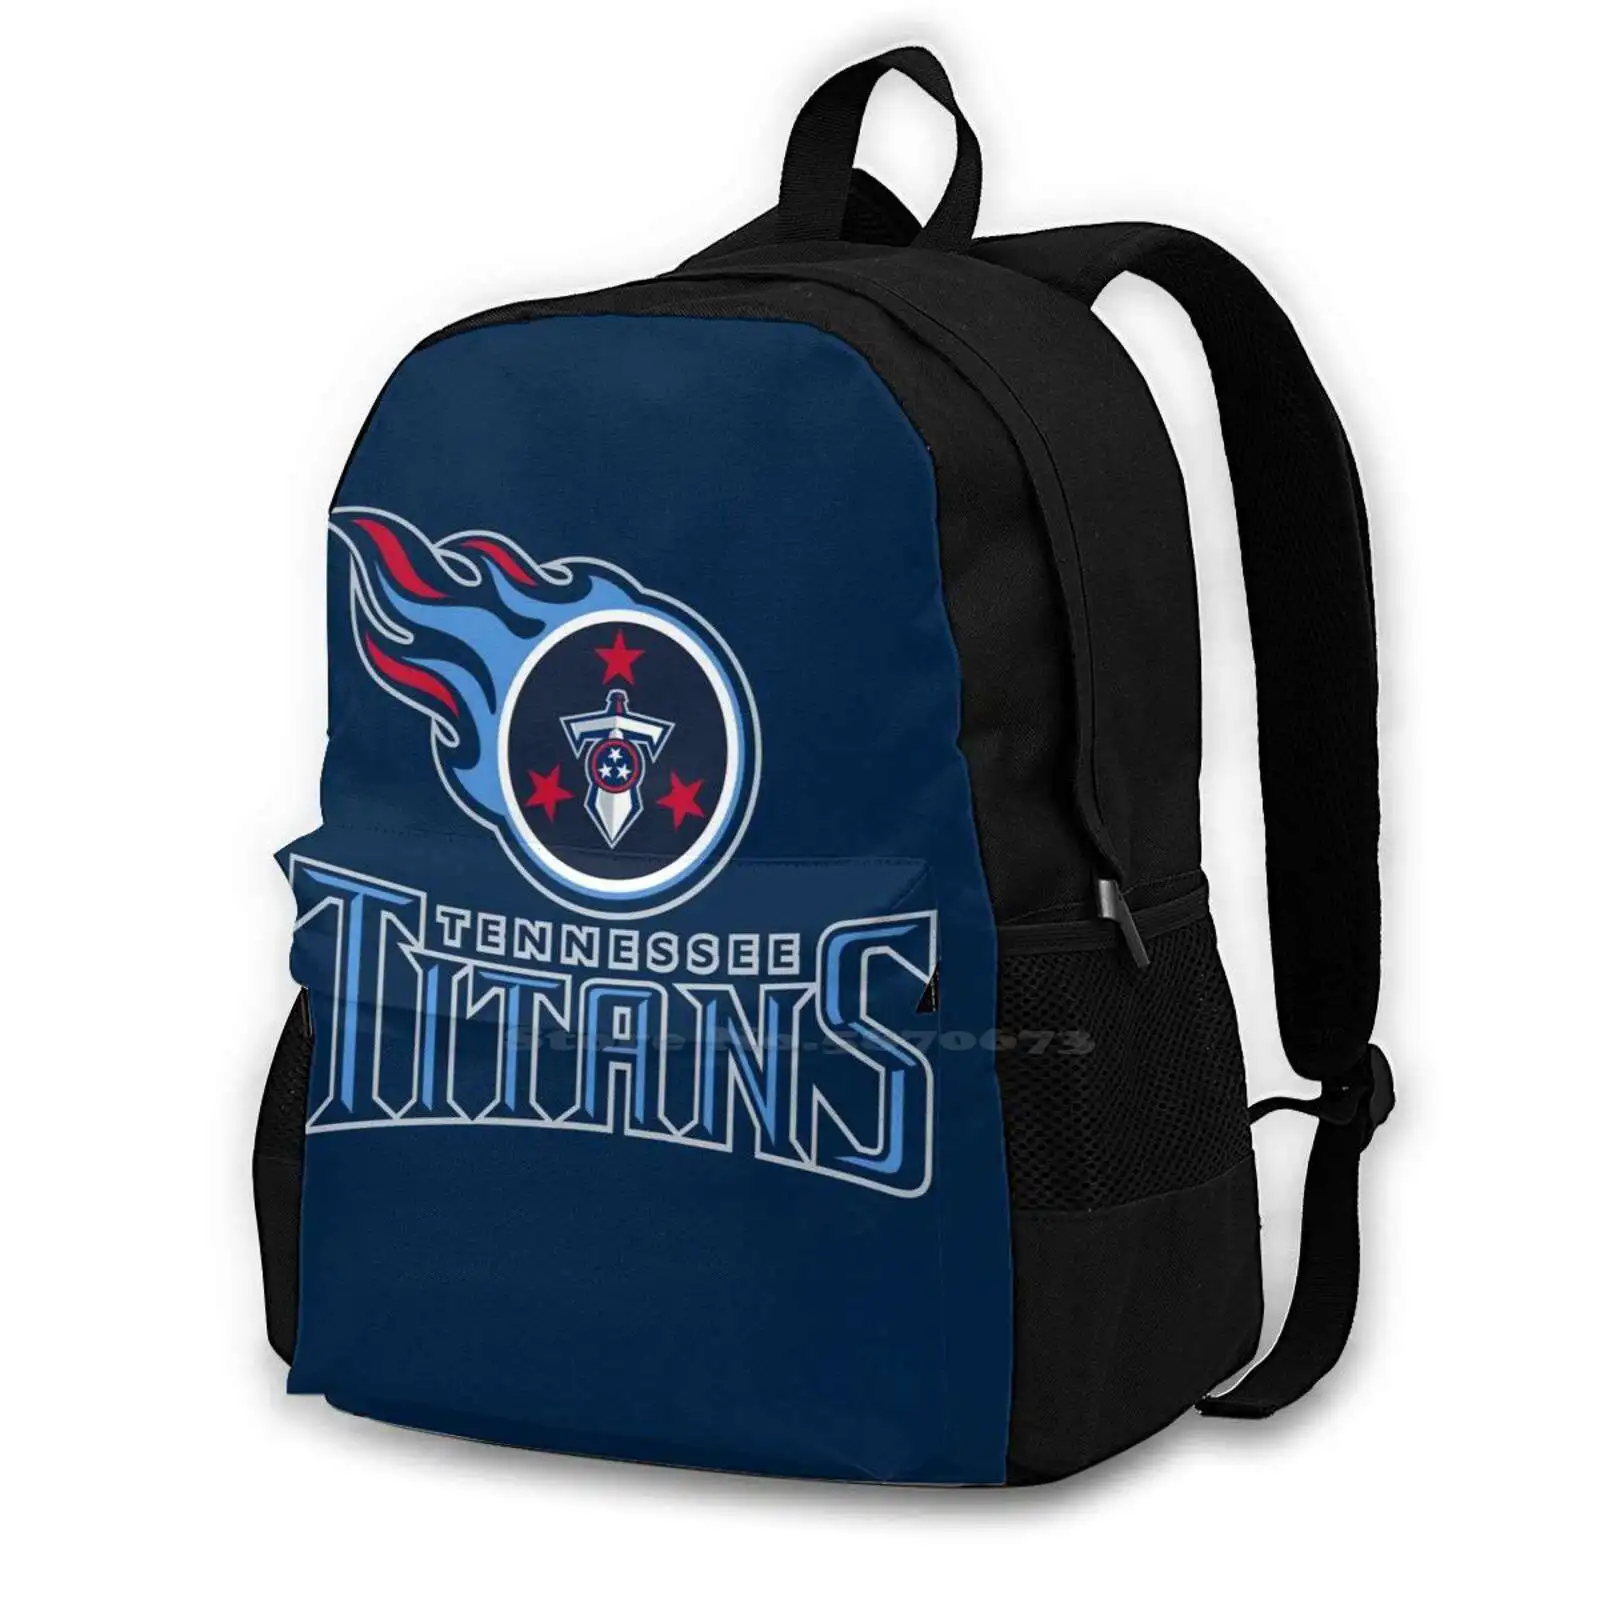 

Sticker - Titans Tennessee Fashion Travel Laptop School Backpack Bag Logo